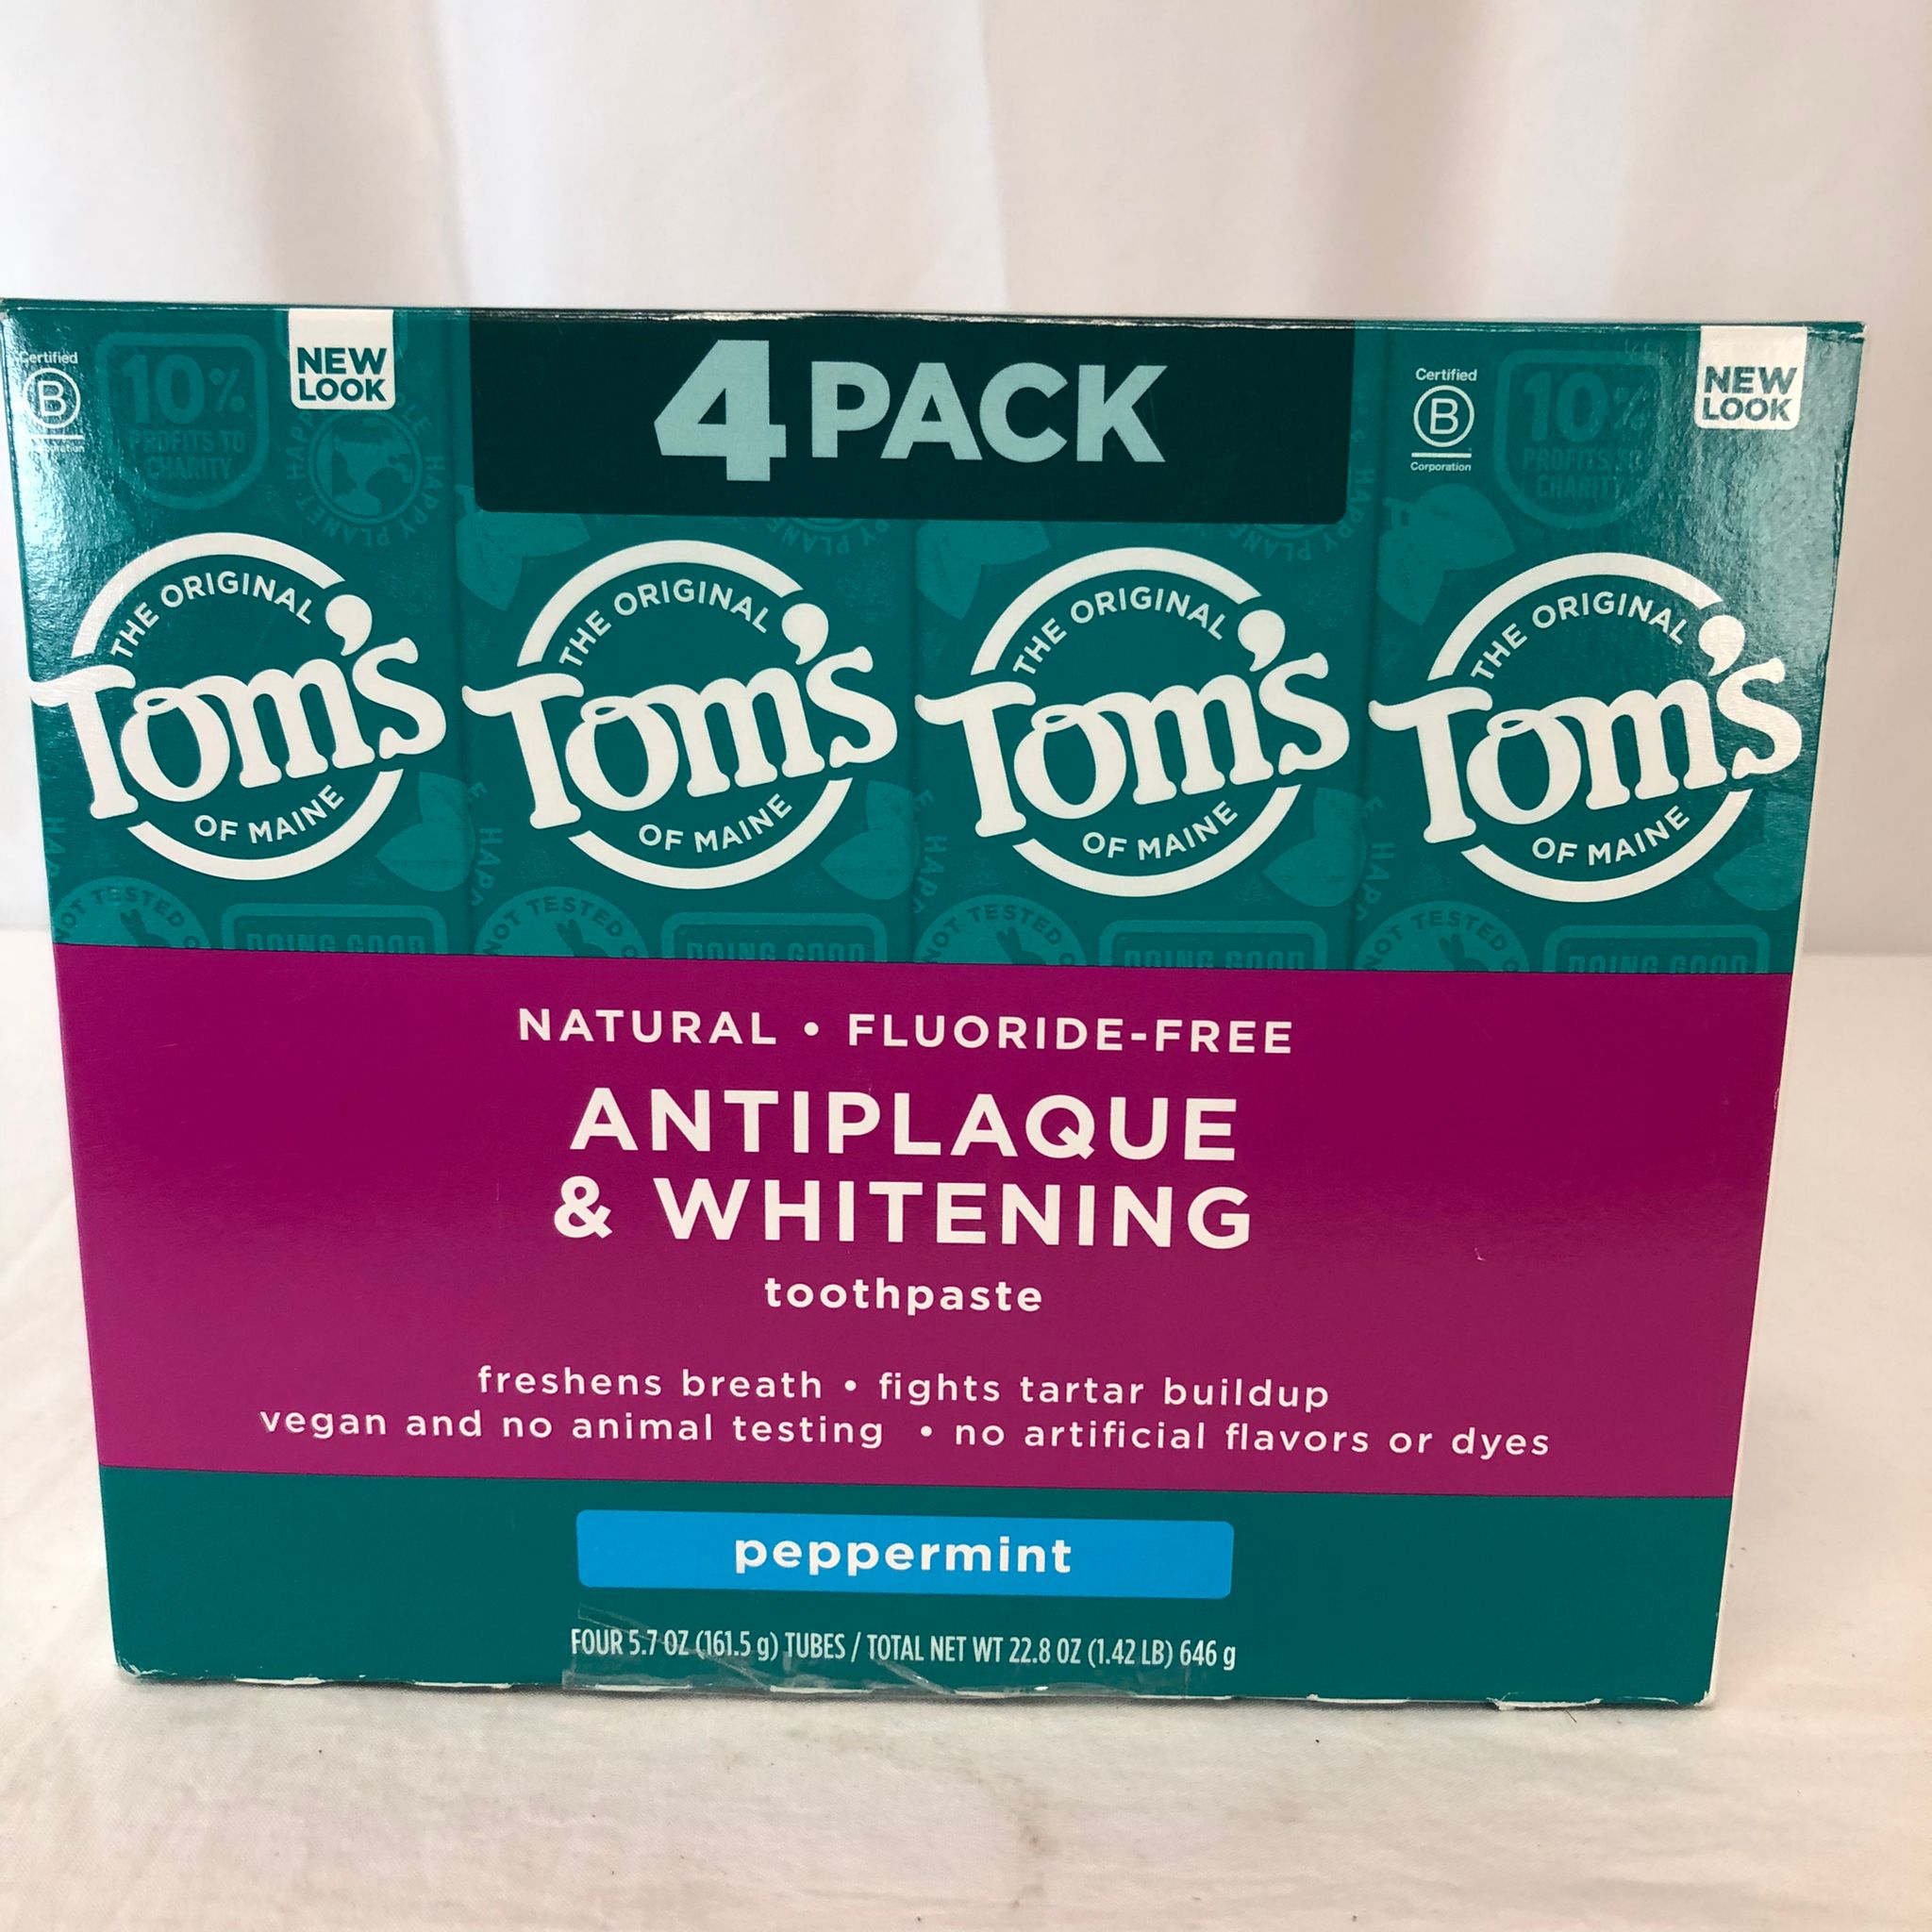 Tom's of Maine Antiplaque & Whitening Toothpaste, 5.7 oz, 4-pack